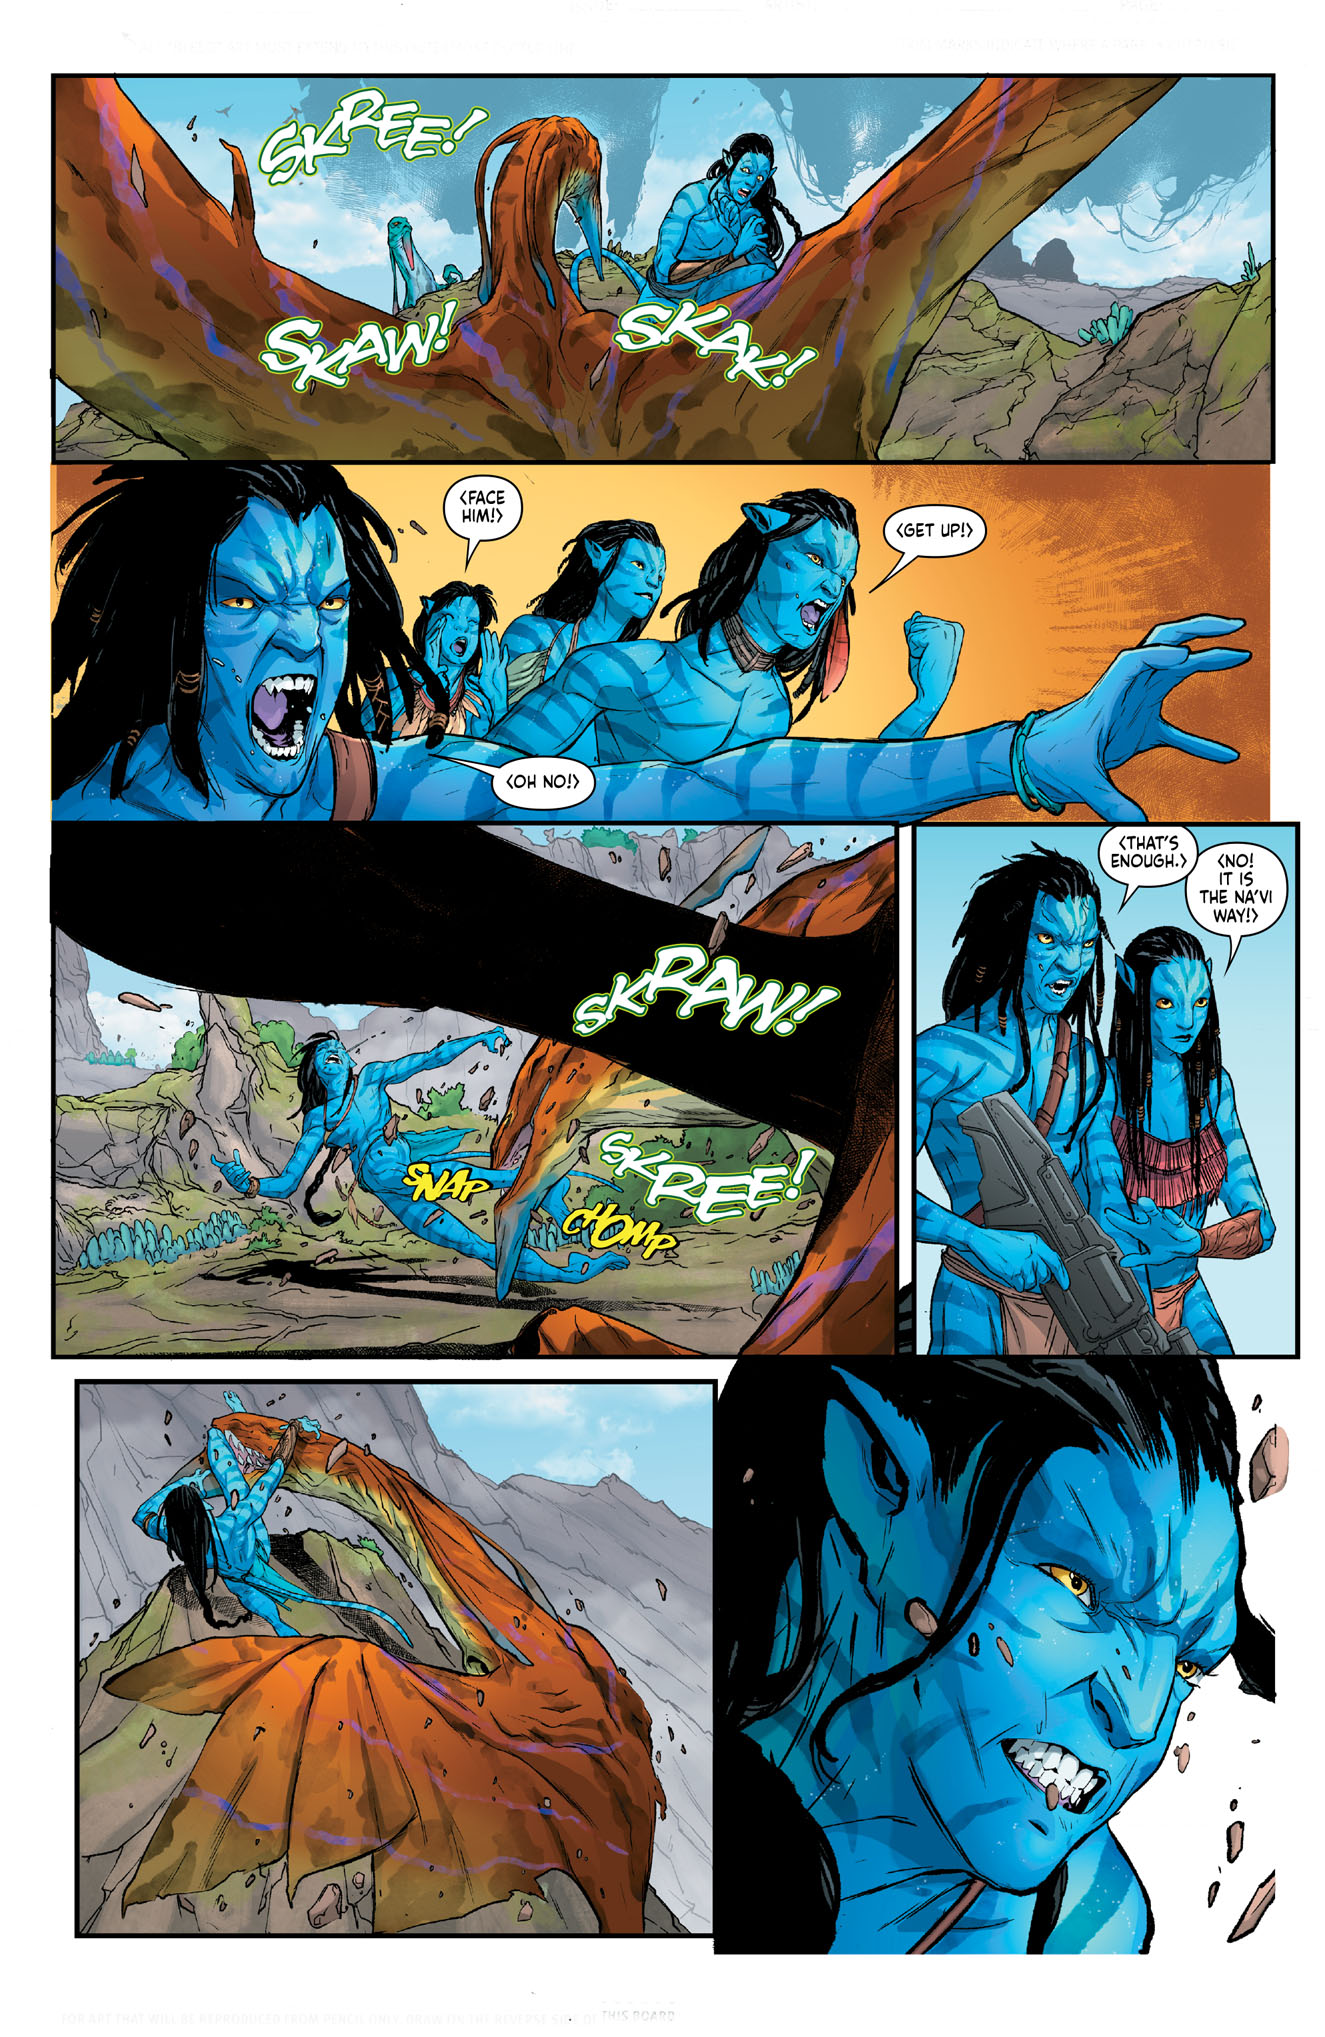 Avatar: The High Ground Volume 1 HC :: Profile :: Dark Horse Comics